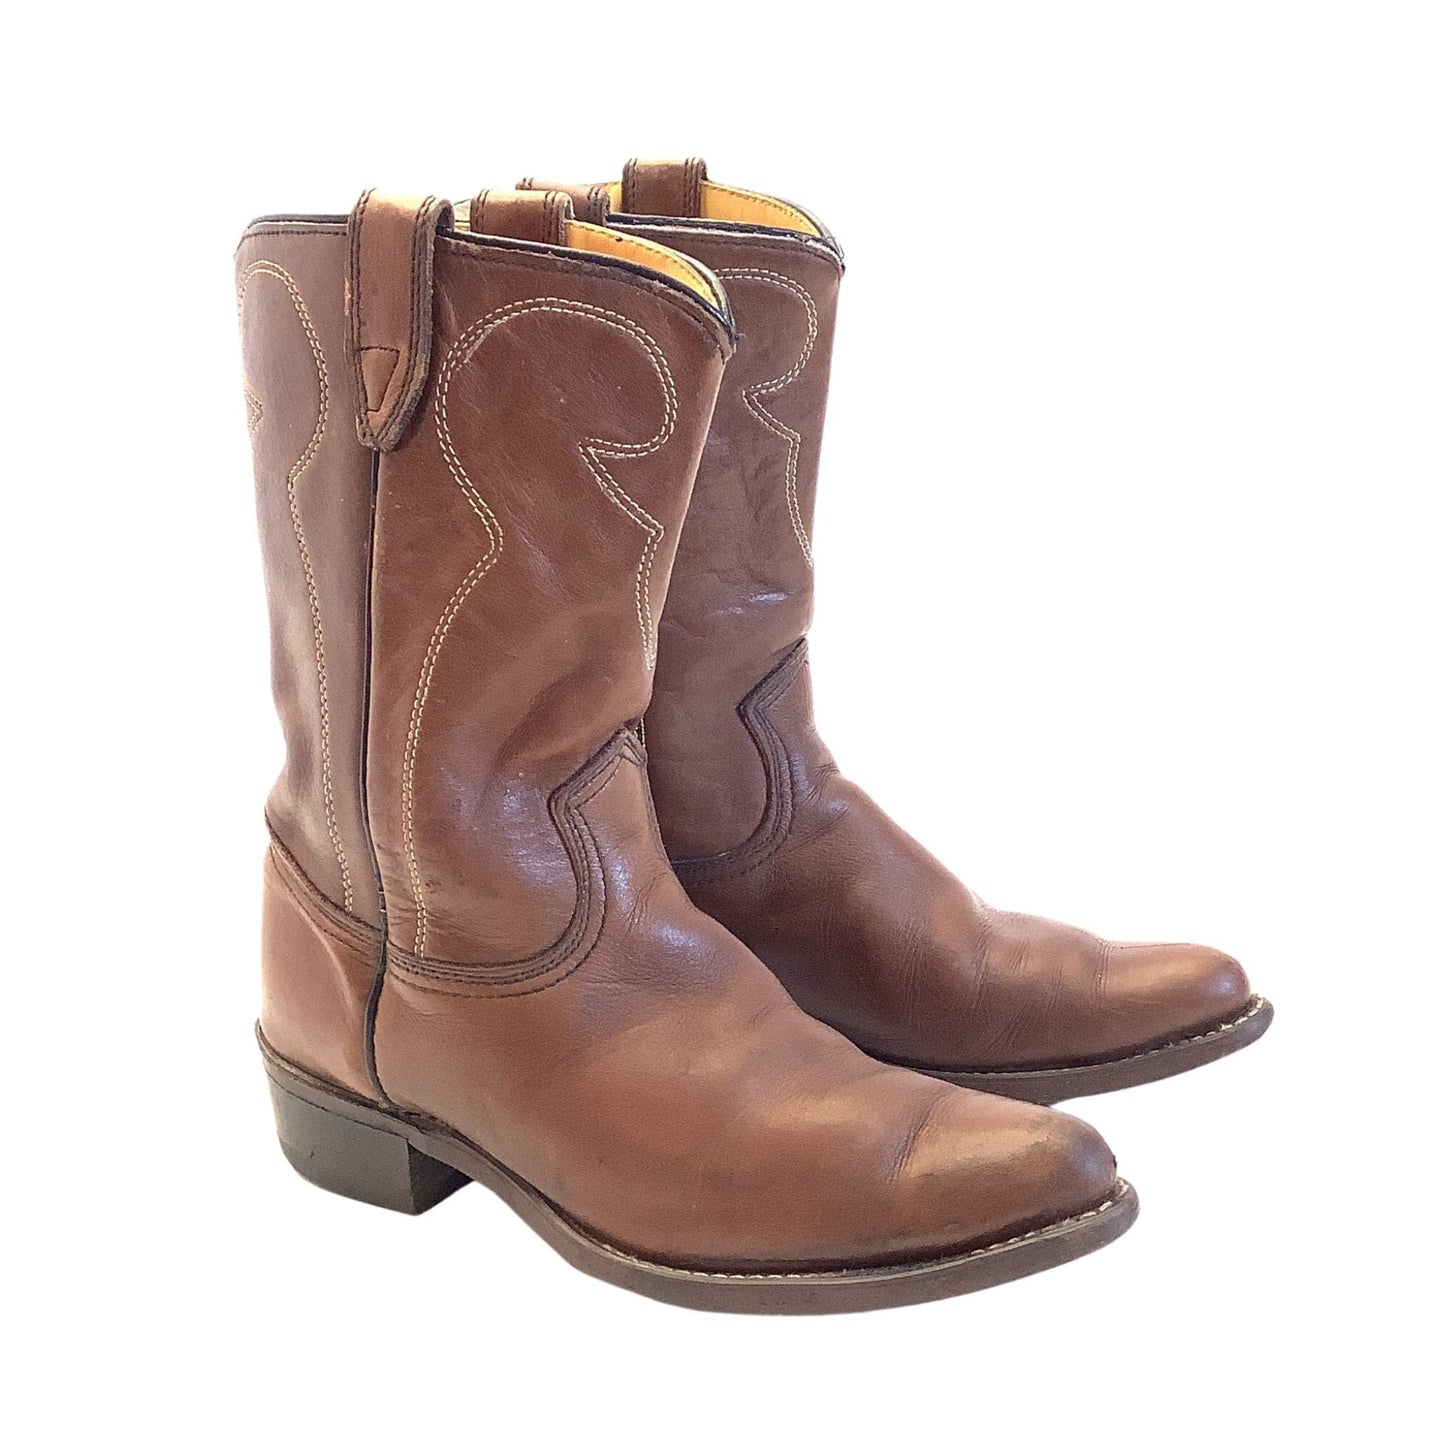 1950s Cowboy Boots 5.5 / Brown / Vintage 1950s